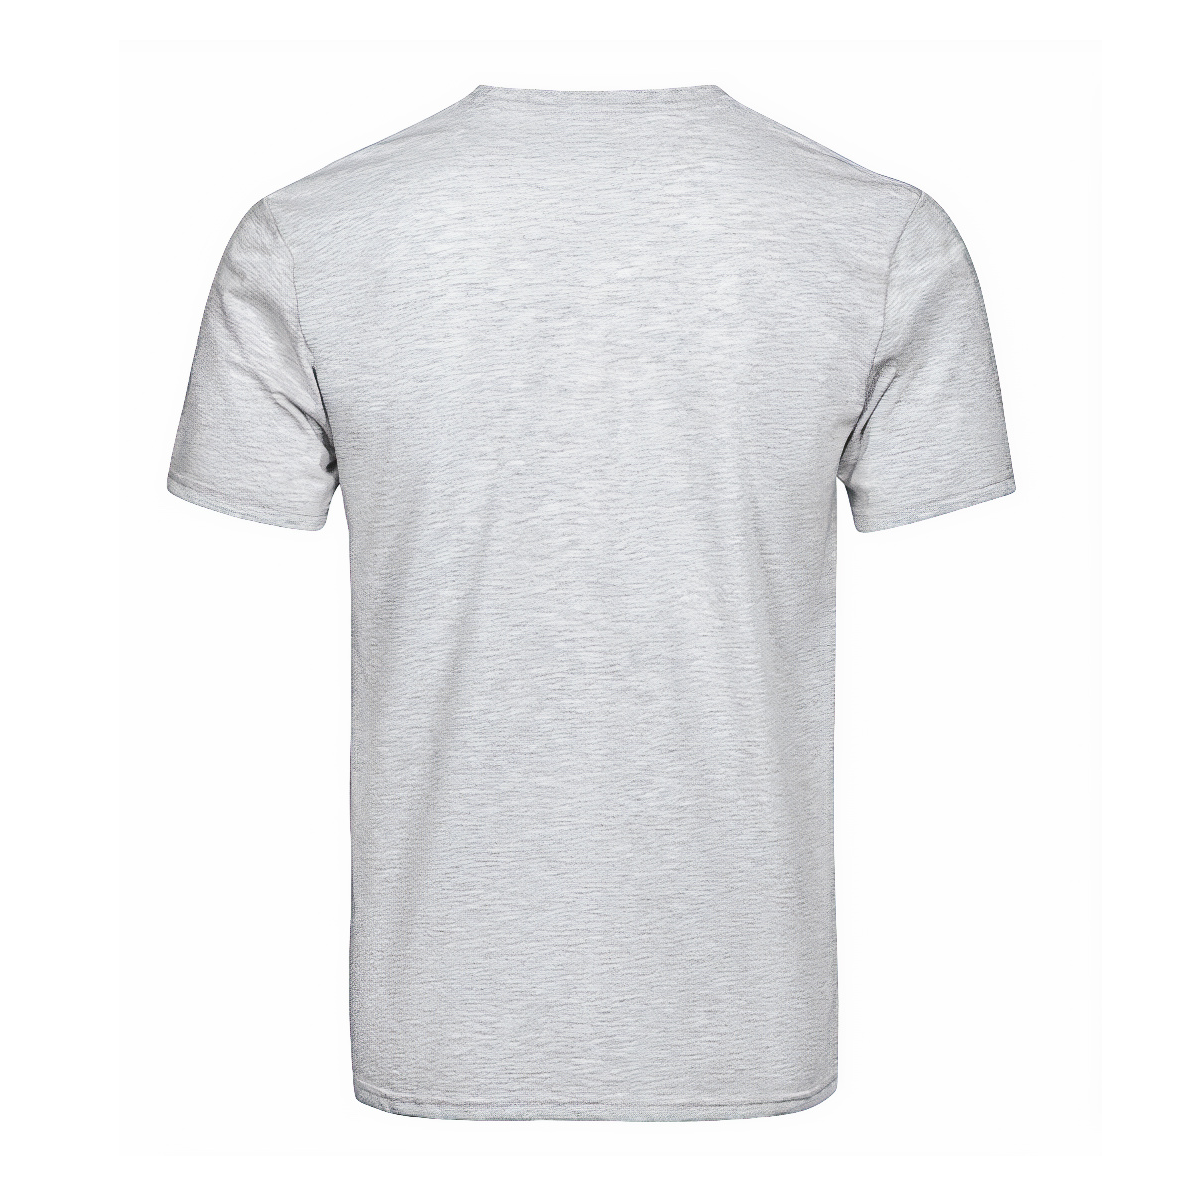 Dalrymple Tartan Crest T-shirt - I'm not yelling style